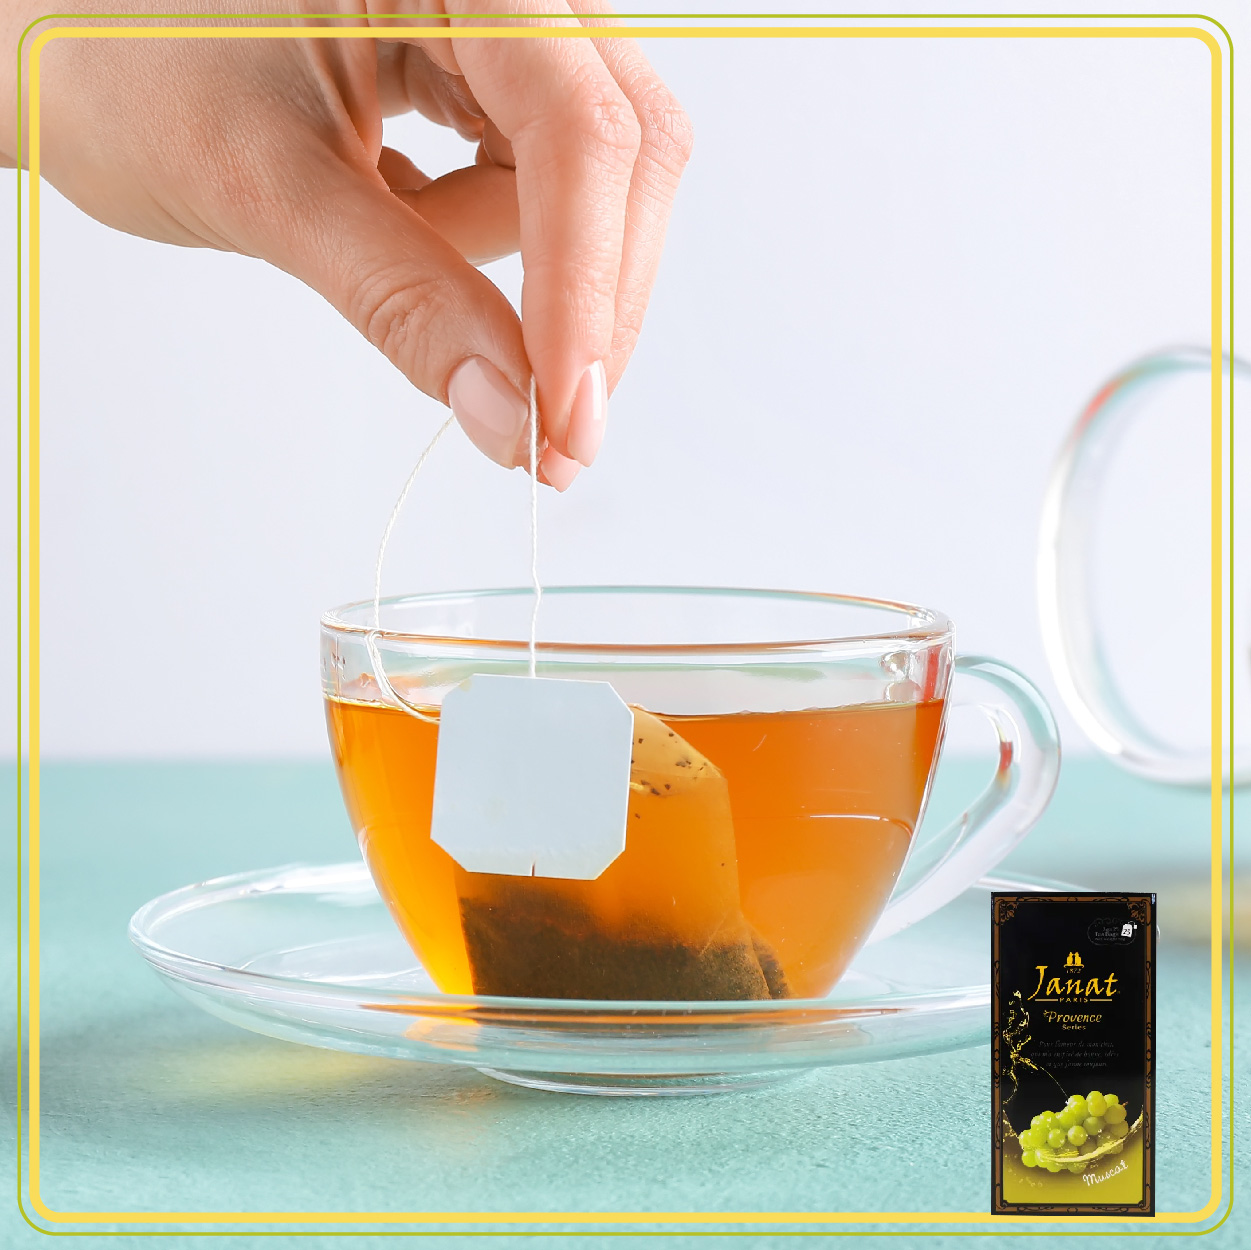 Janat 白葡萄風味茶 麝香葡萄與紅茶的完美結合 享受下午茶的休閒時光